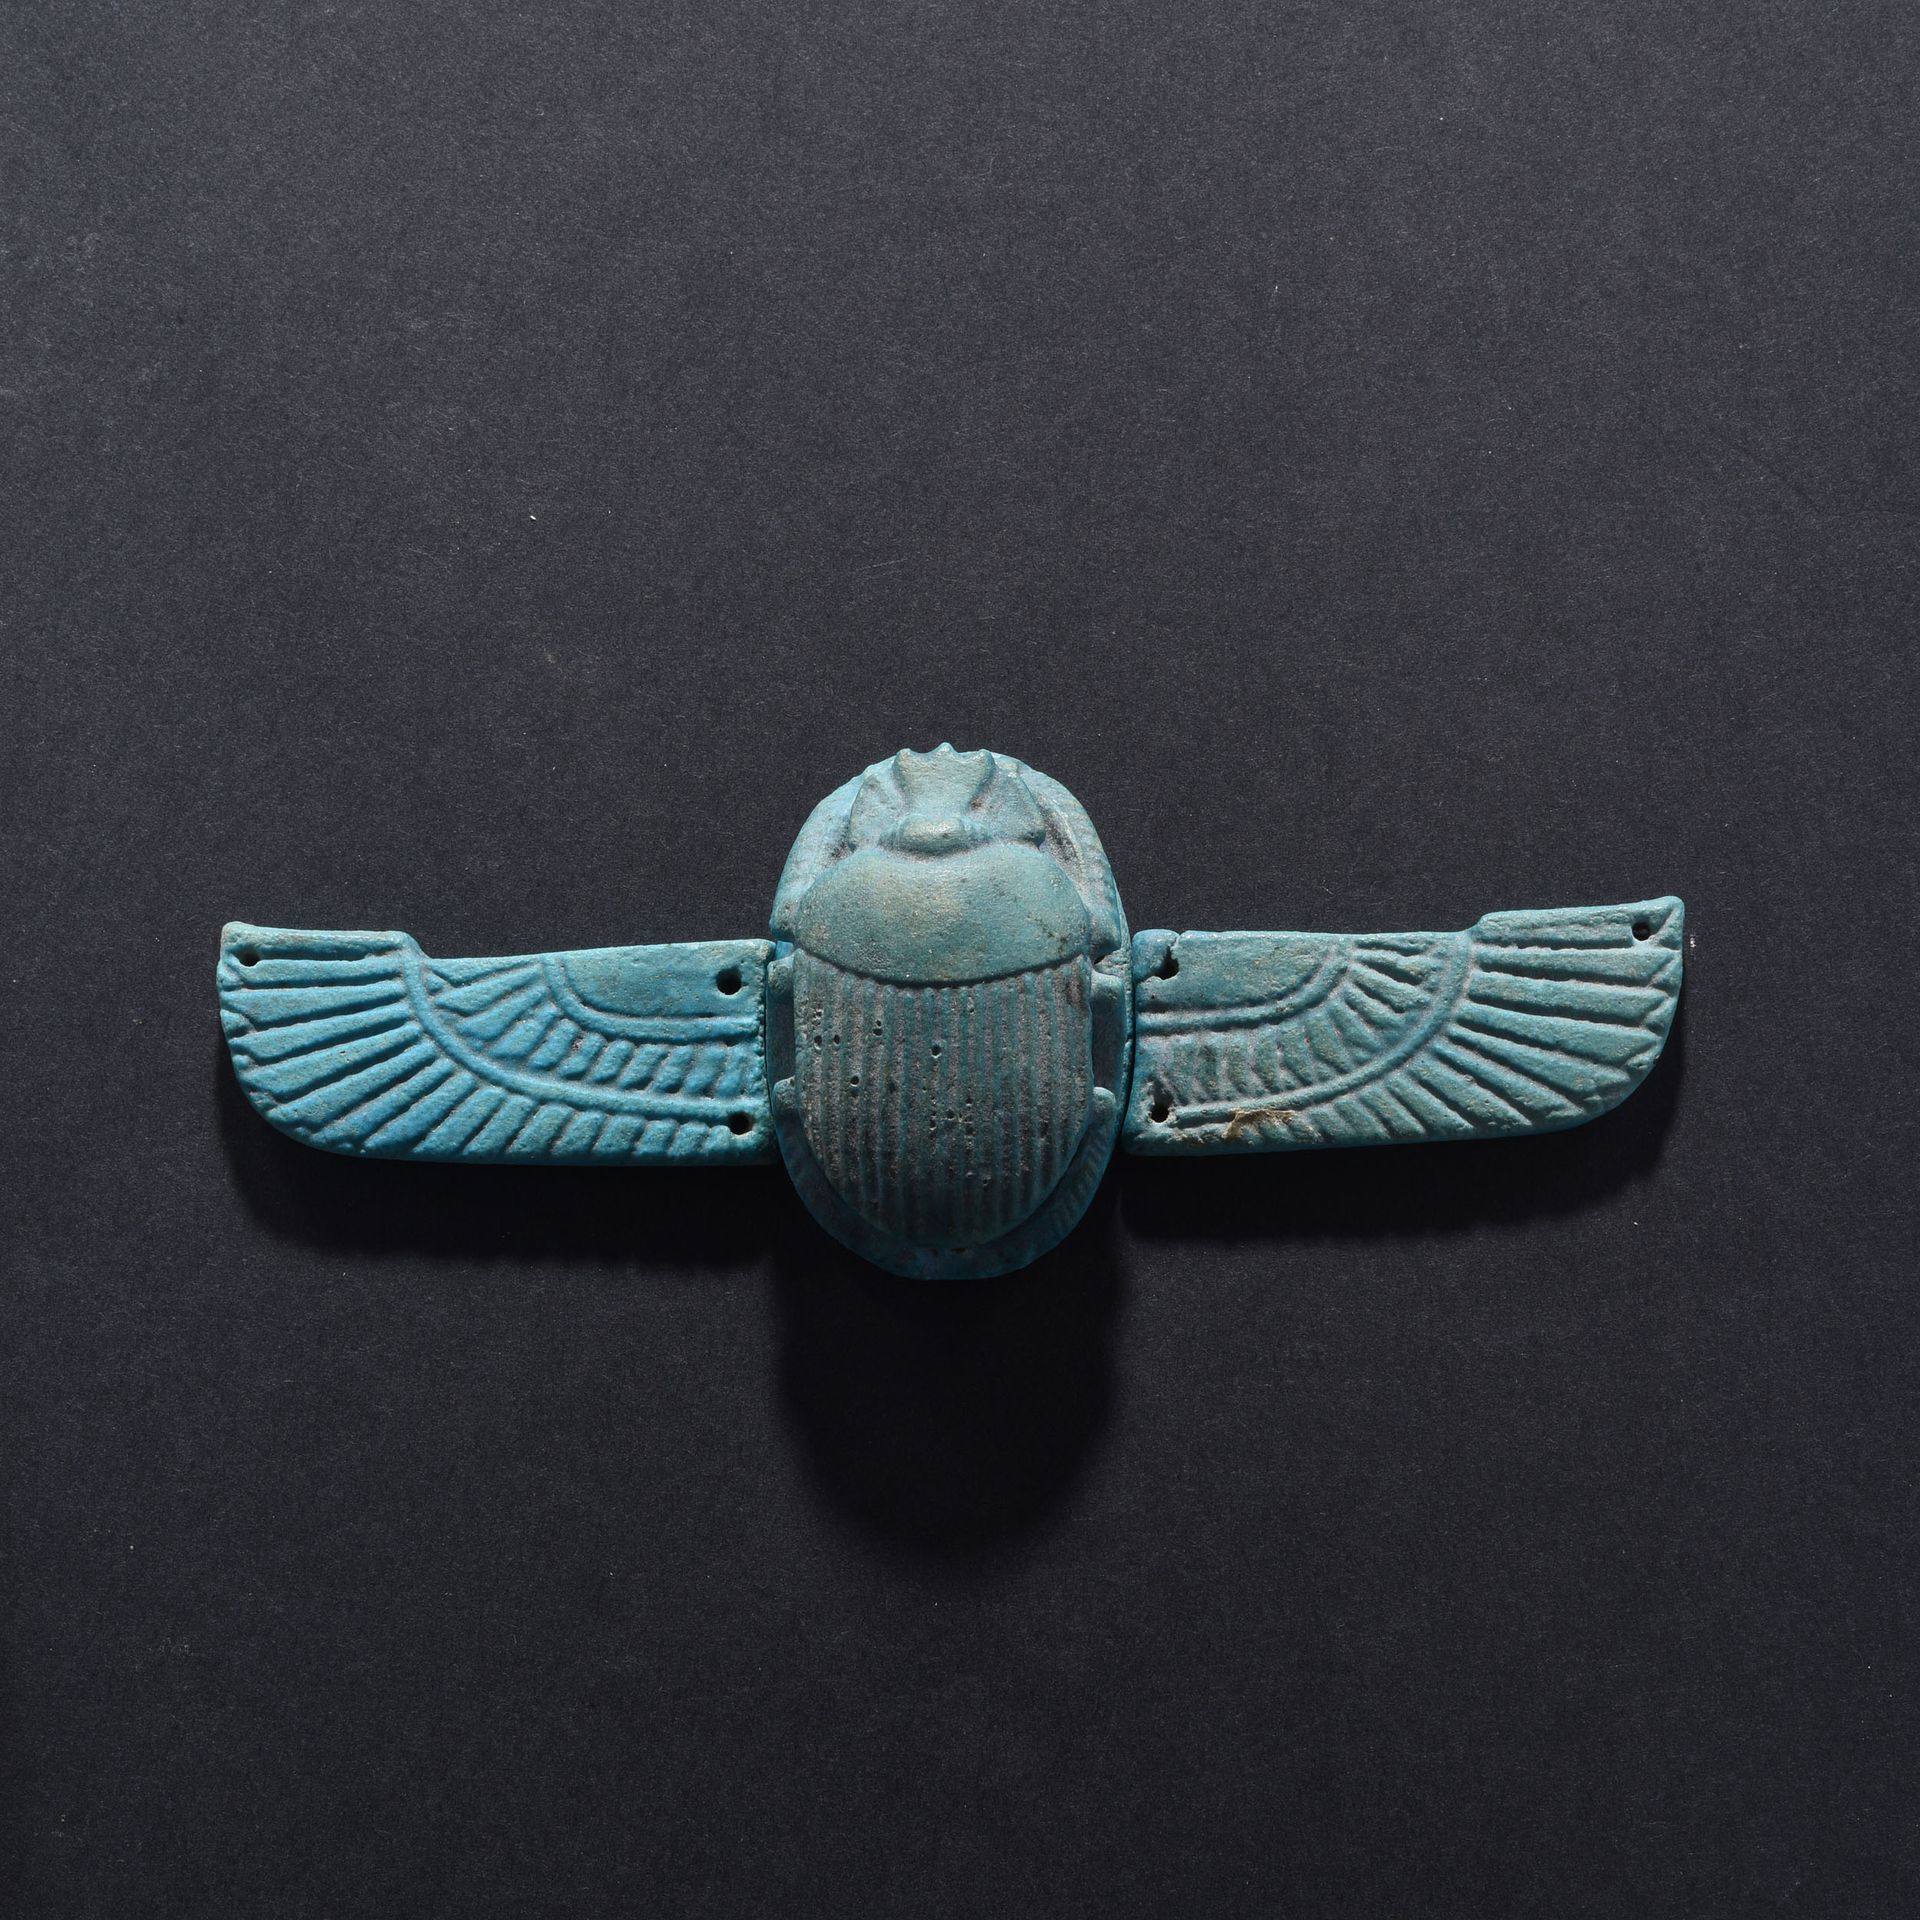 Null 陪葬品

埃及，托勒密时期，公元前332-30年

由一只甲壳虫和它的翅膀组成，由蓝色熔块制成。

钻孔用于连接木乃伊的陶制网袍。

甲虫高5.5厘米&hellip;